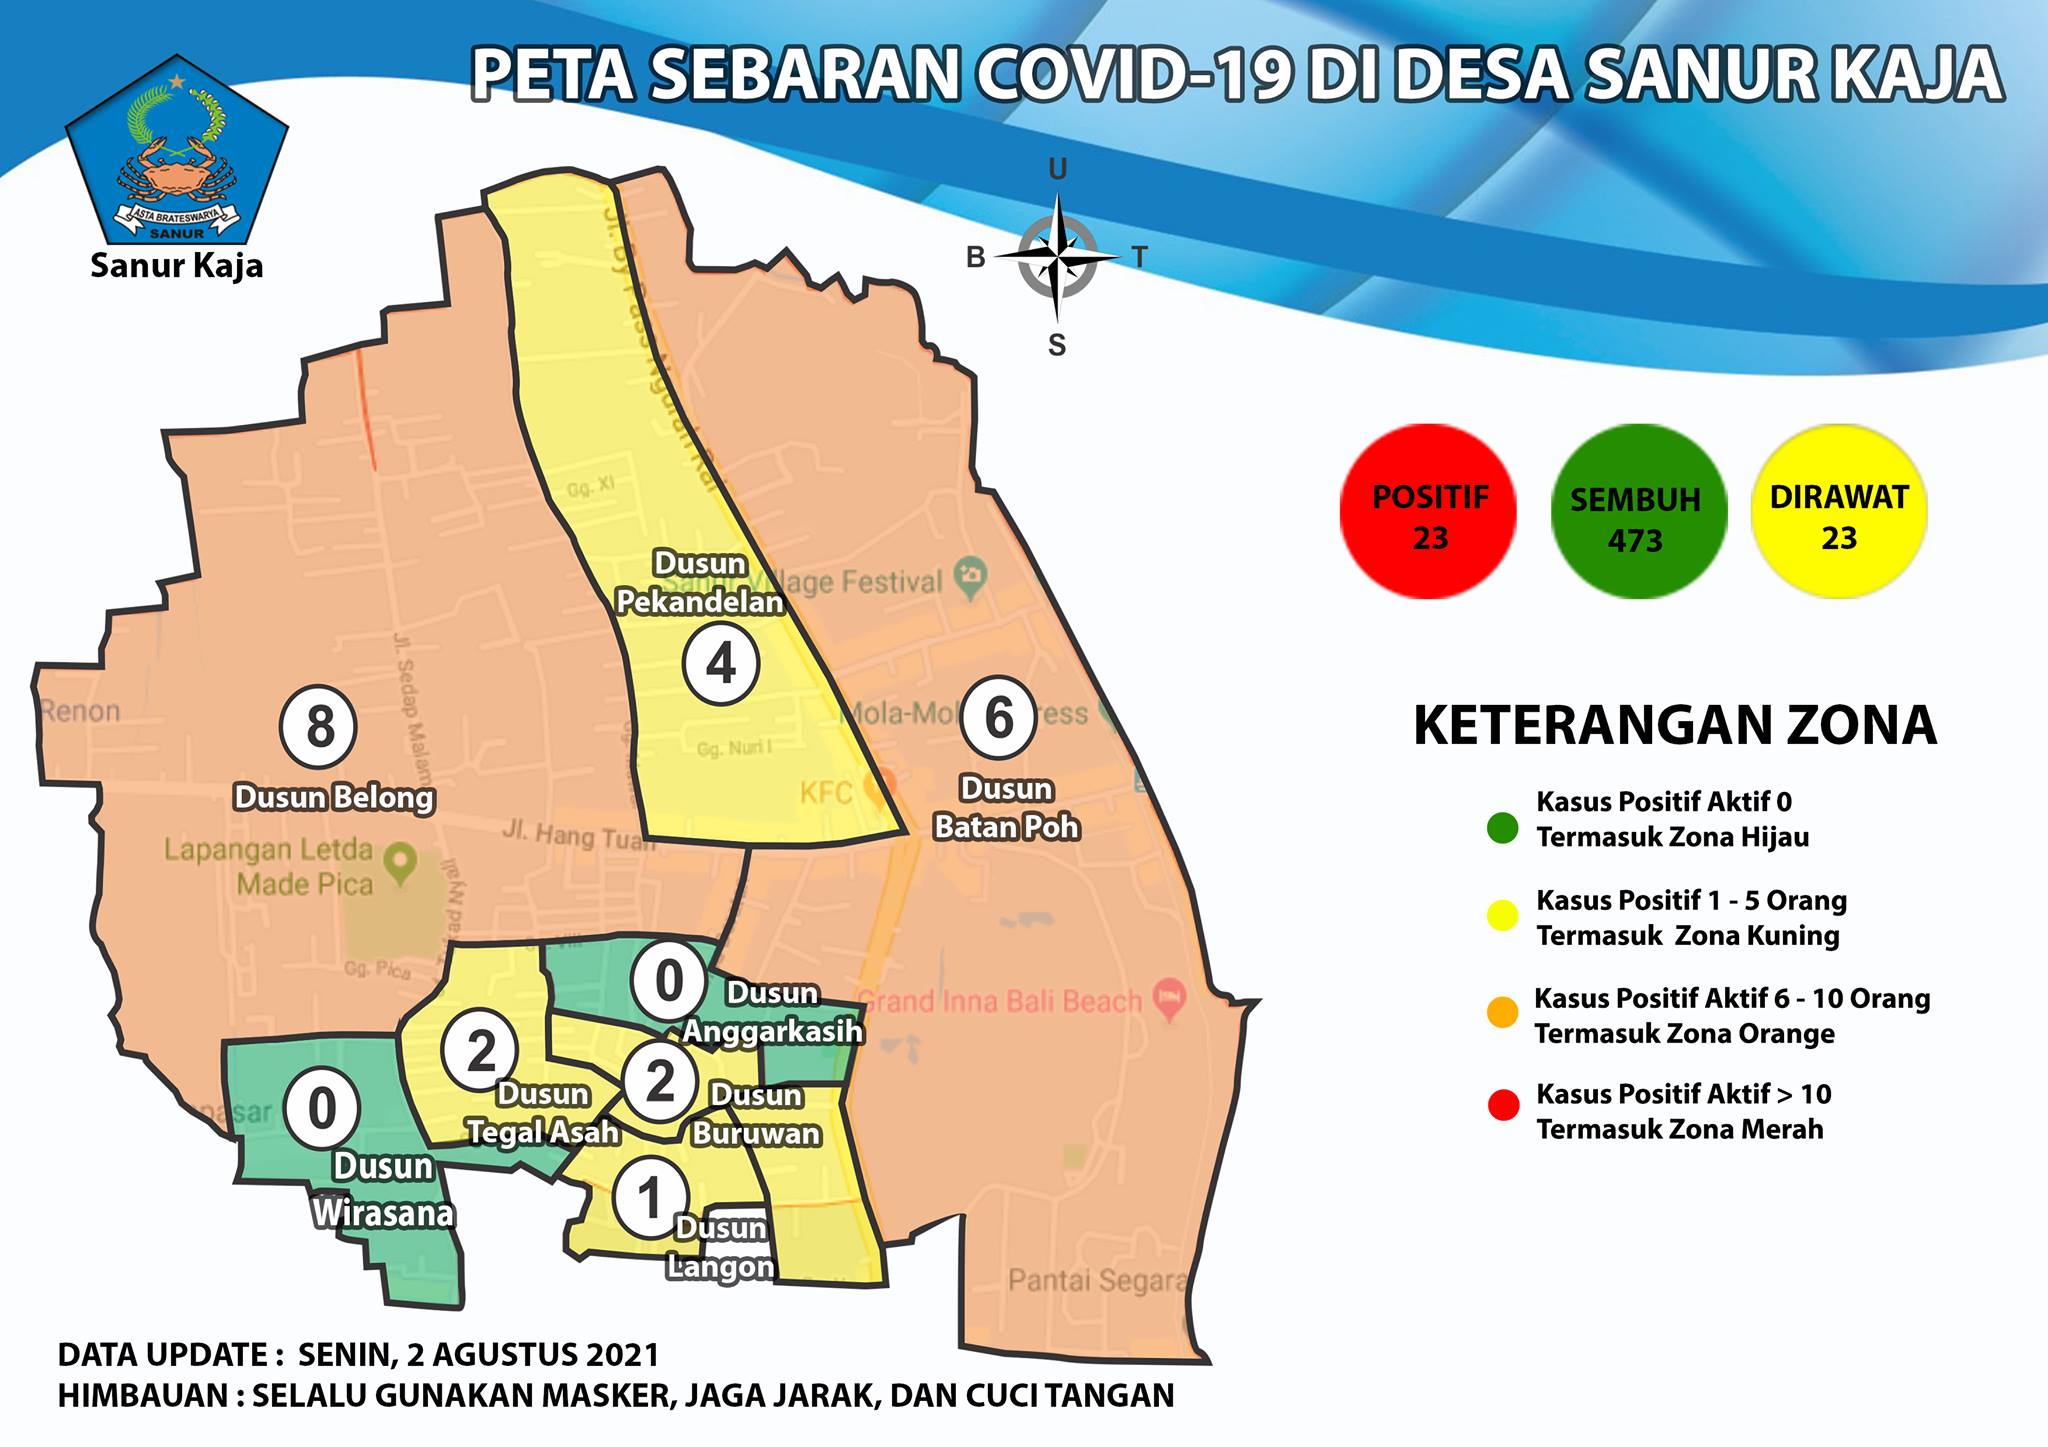 Update Peta Sebaran COVID-19 Di Desa Sanur Kaja